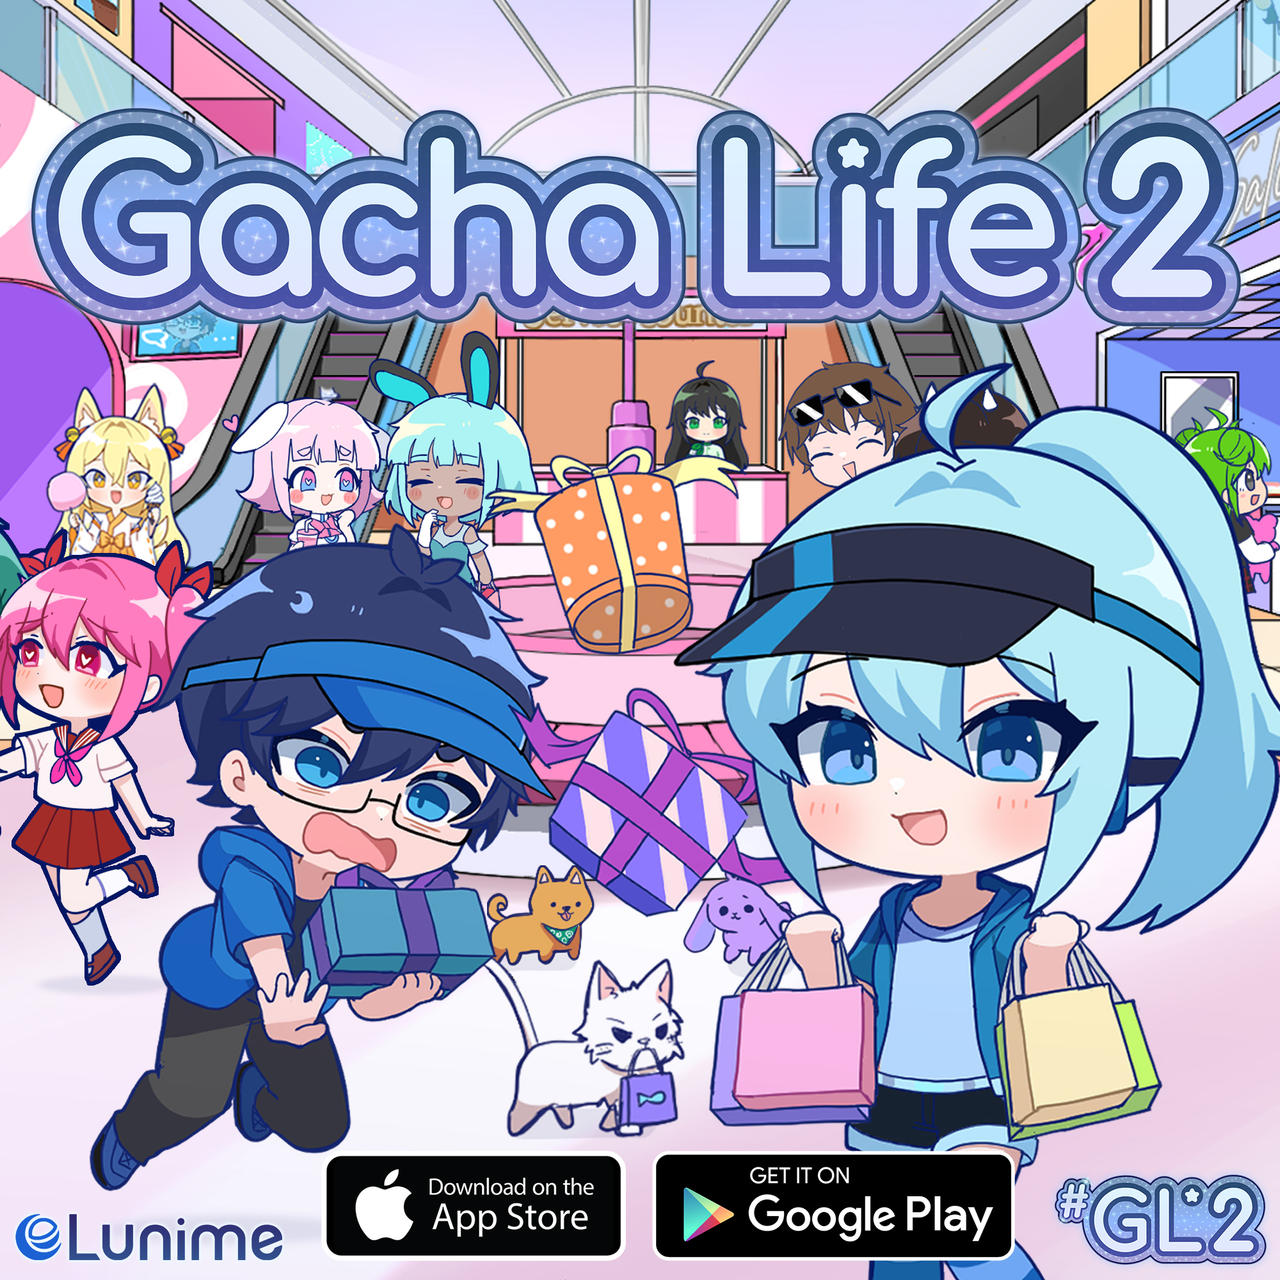 Gacha Life on the App Store